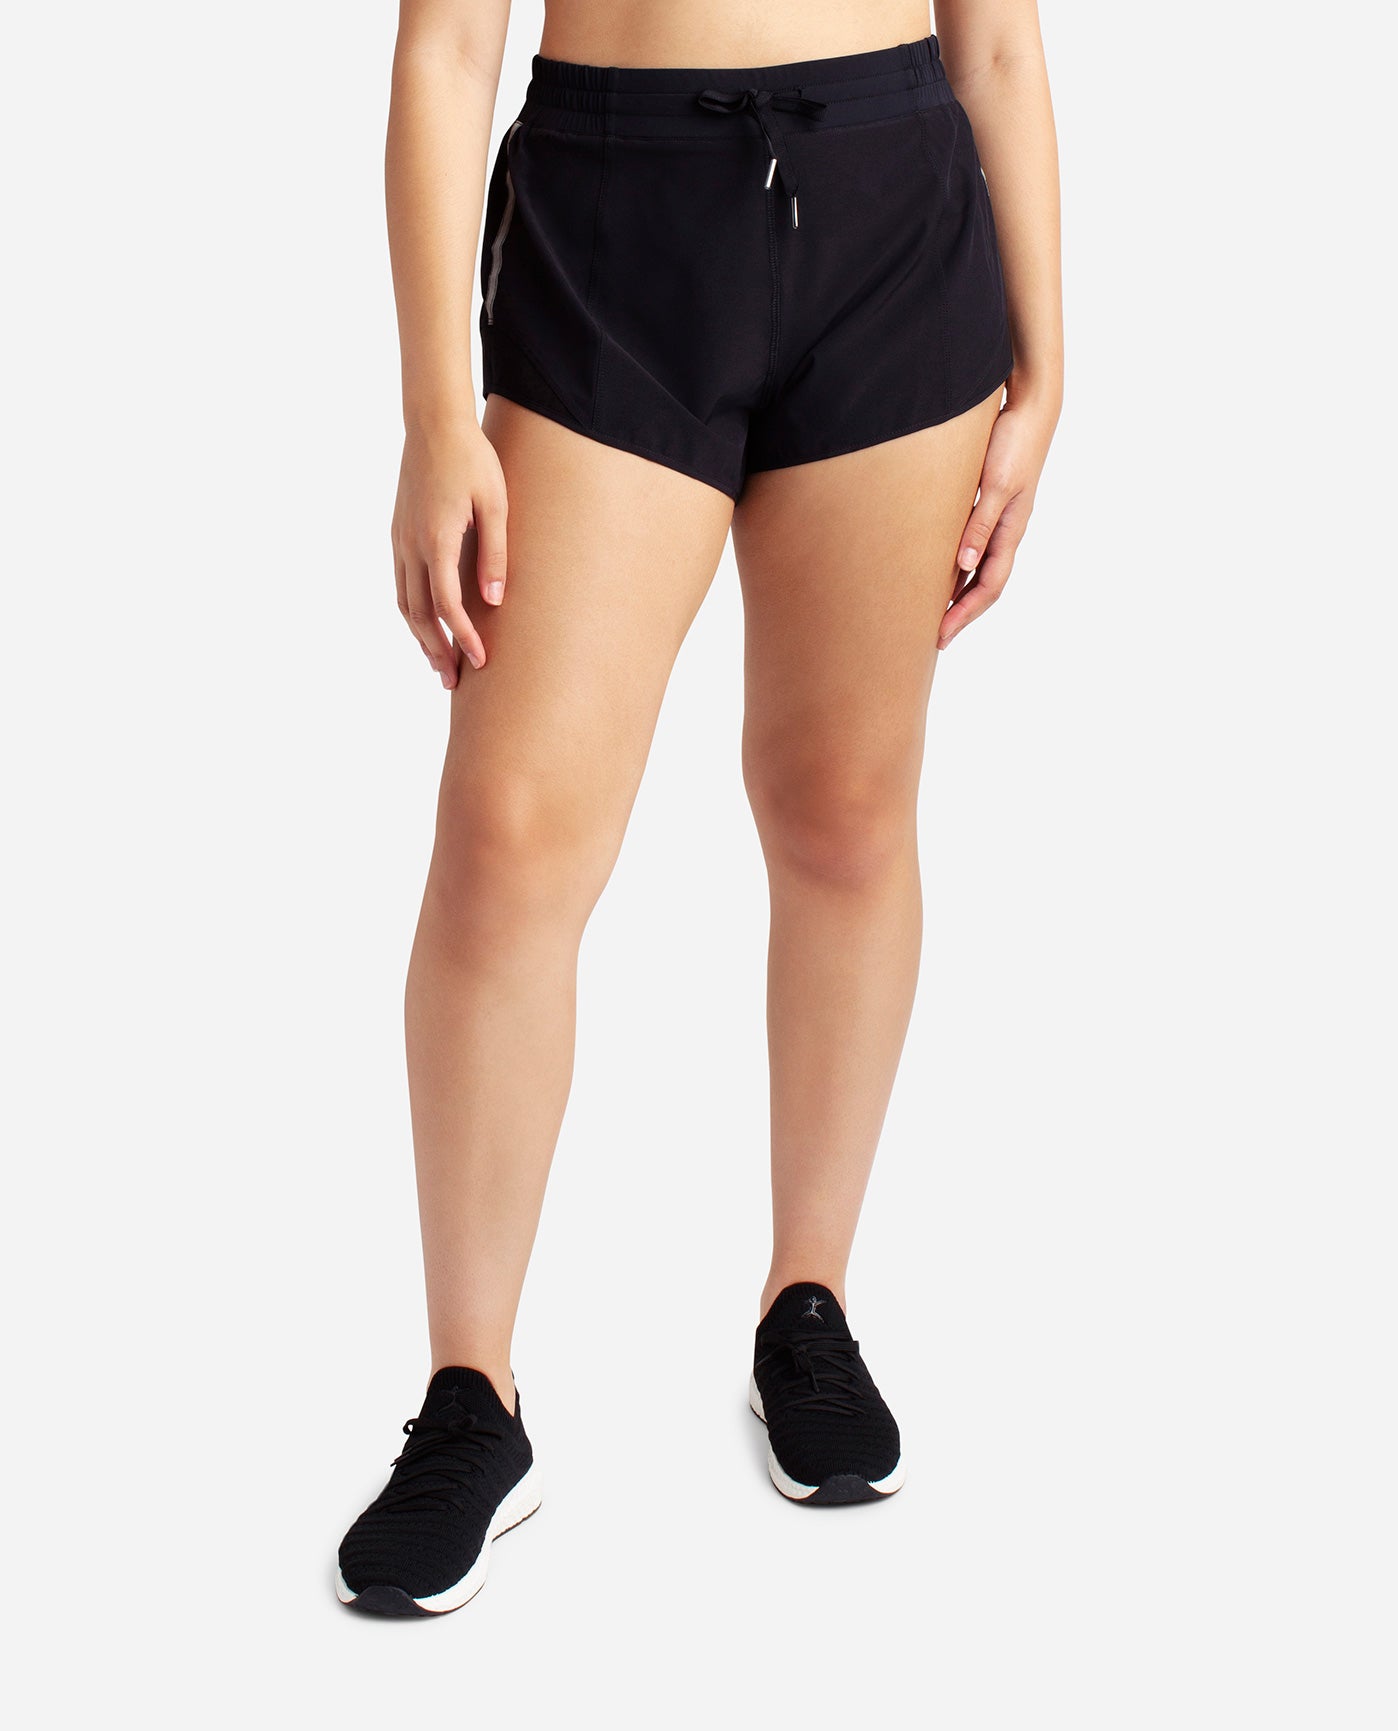 Danskin Now Lounge Shorts Women's Size Medium (8-10) Black